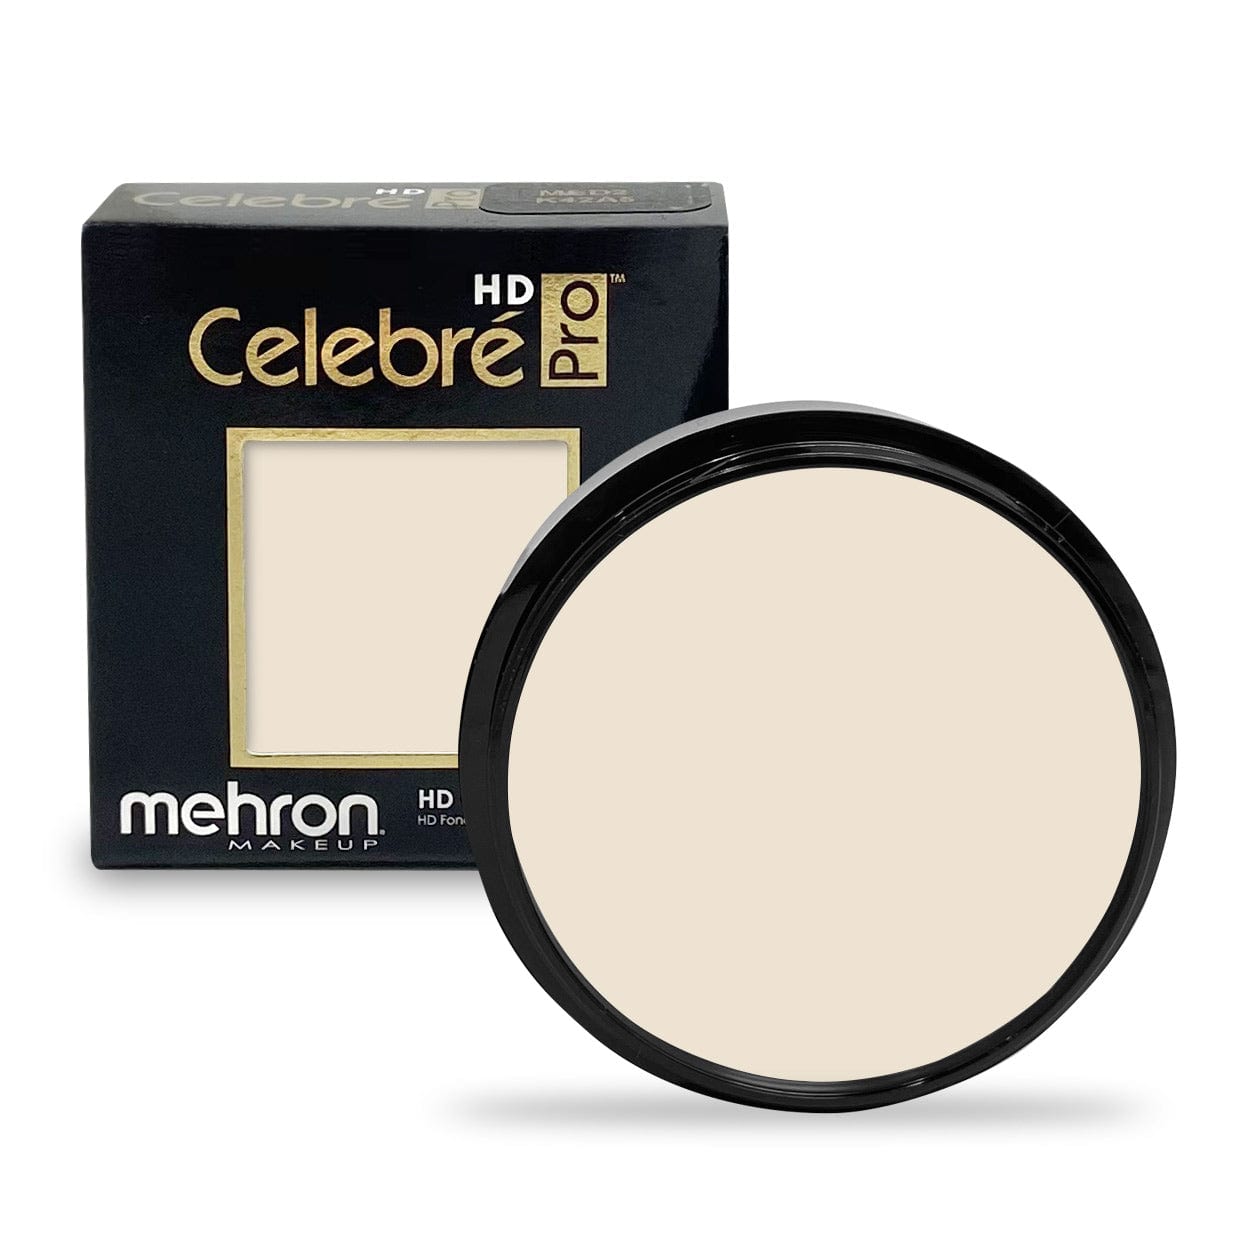 Mehron Celebre Pro HD-Cream 25g - LT0 Eurasia Ivory - Mehron